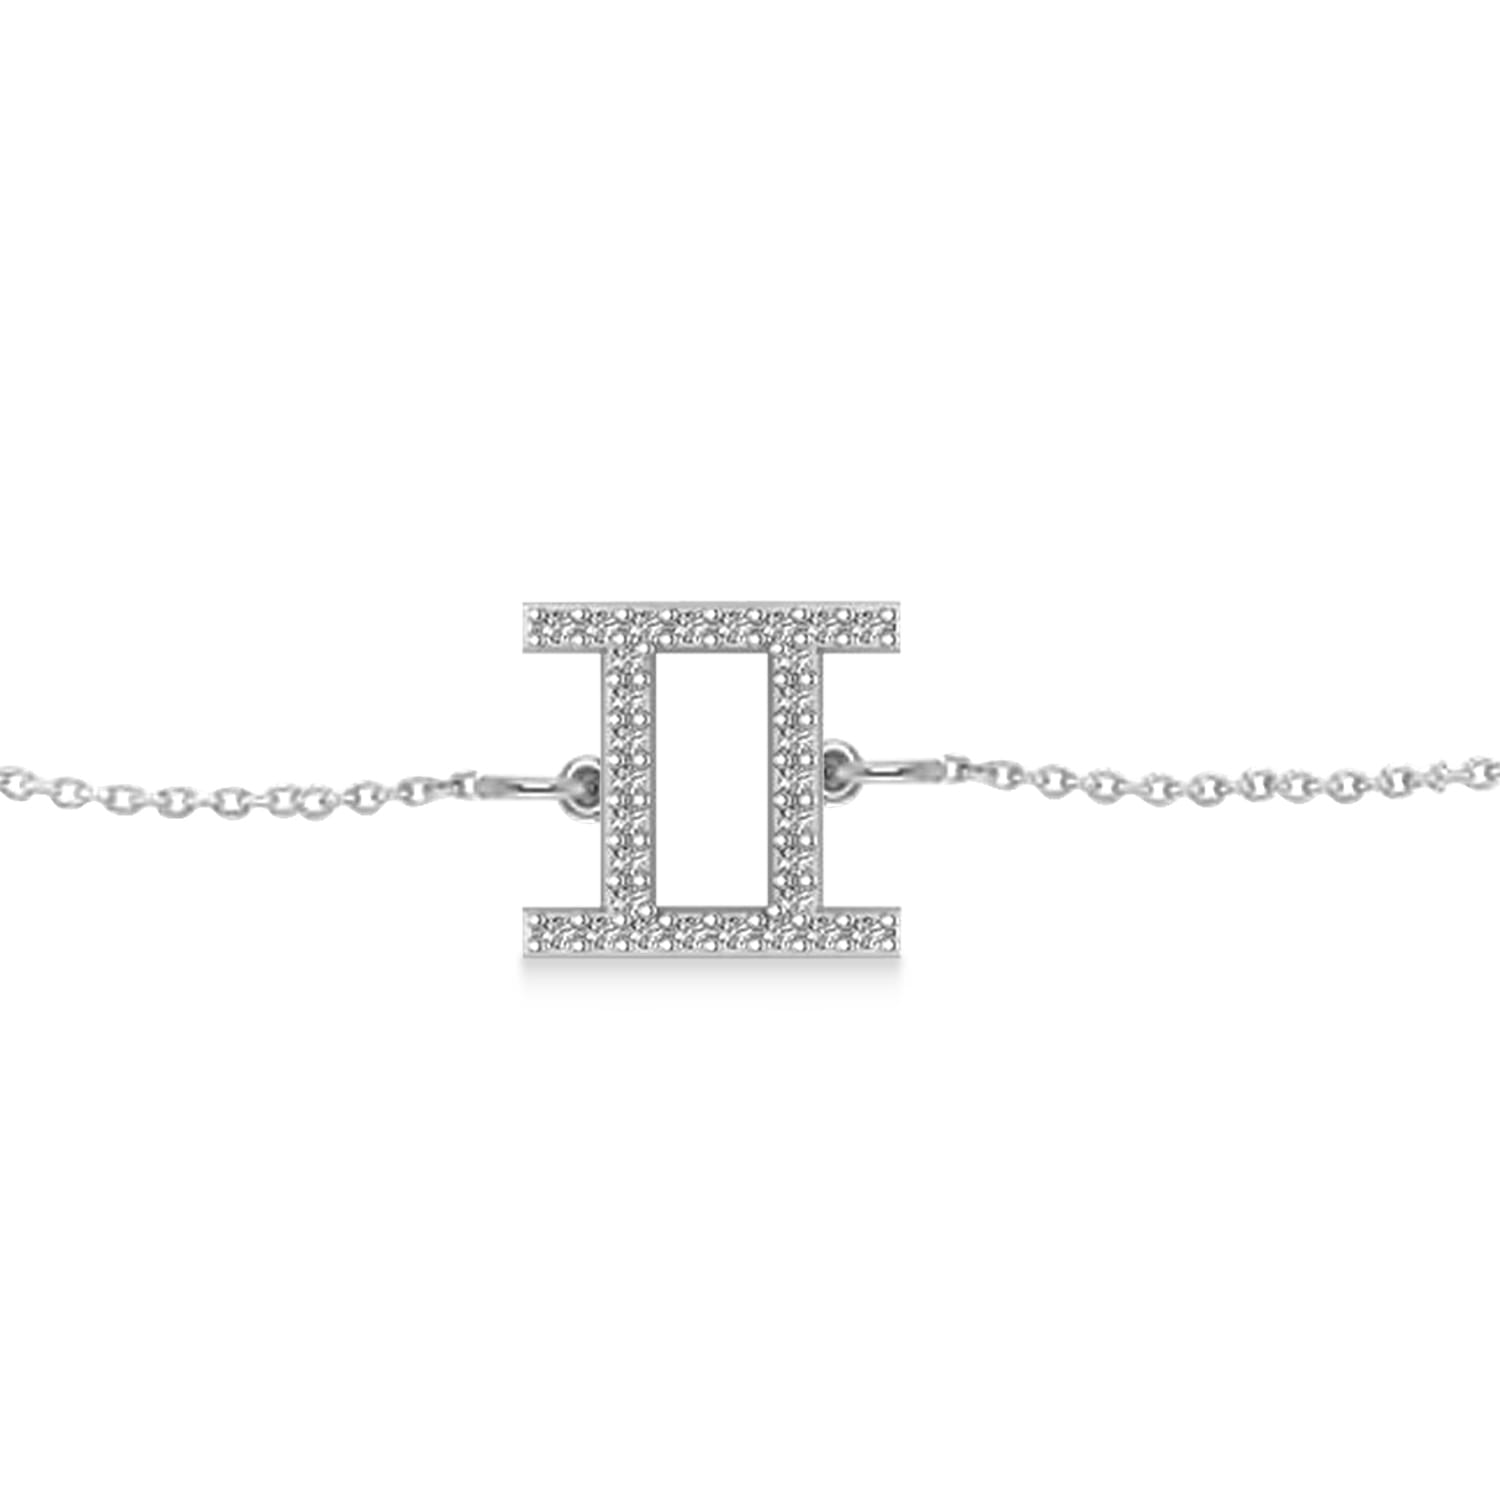 Gemini Zodiac Diamond Bracelet 14k White Gold (0.15ct)